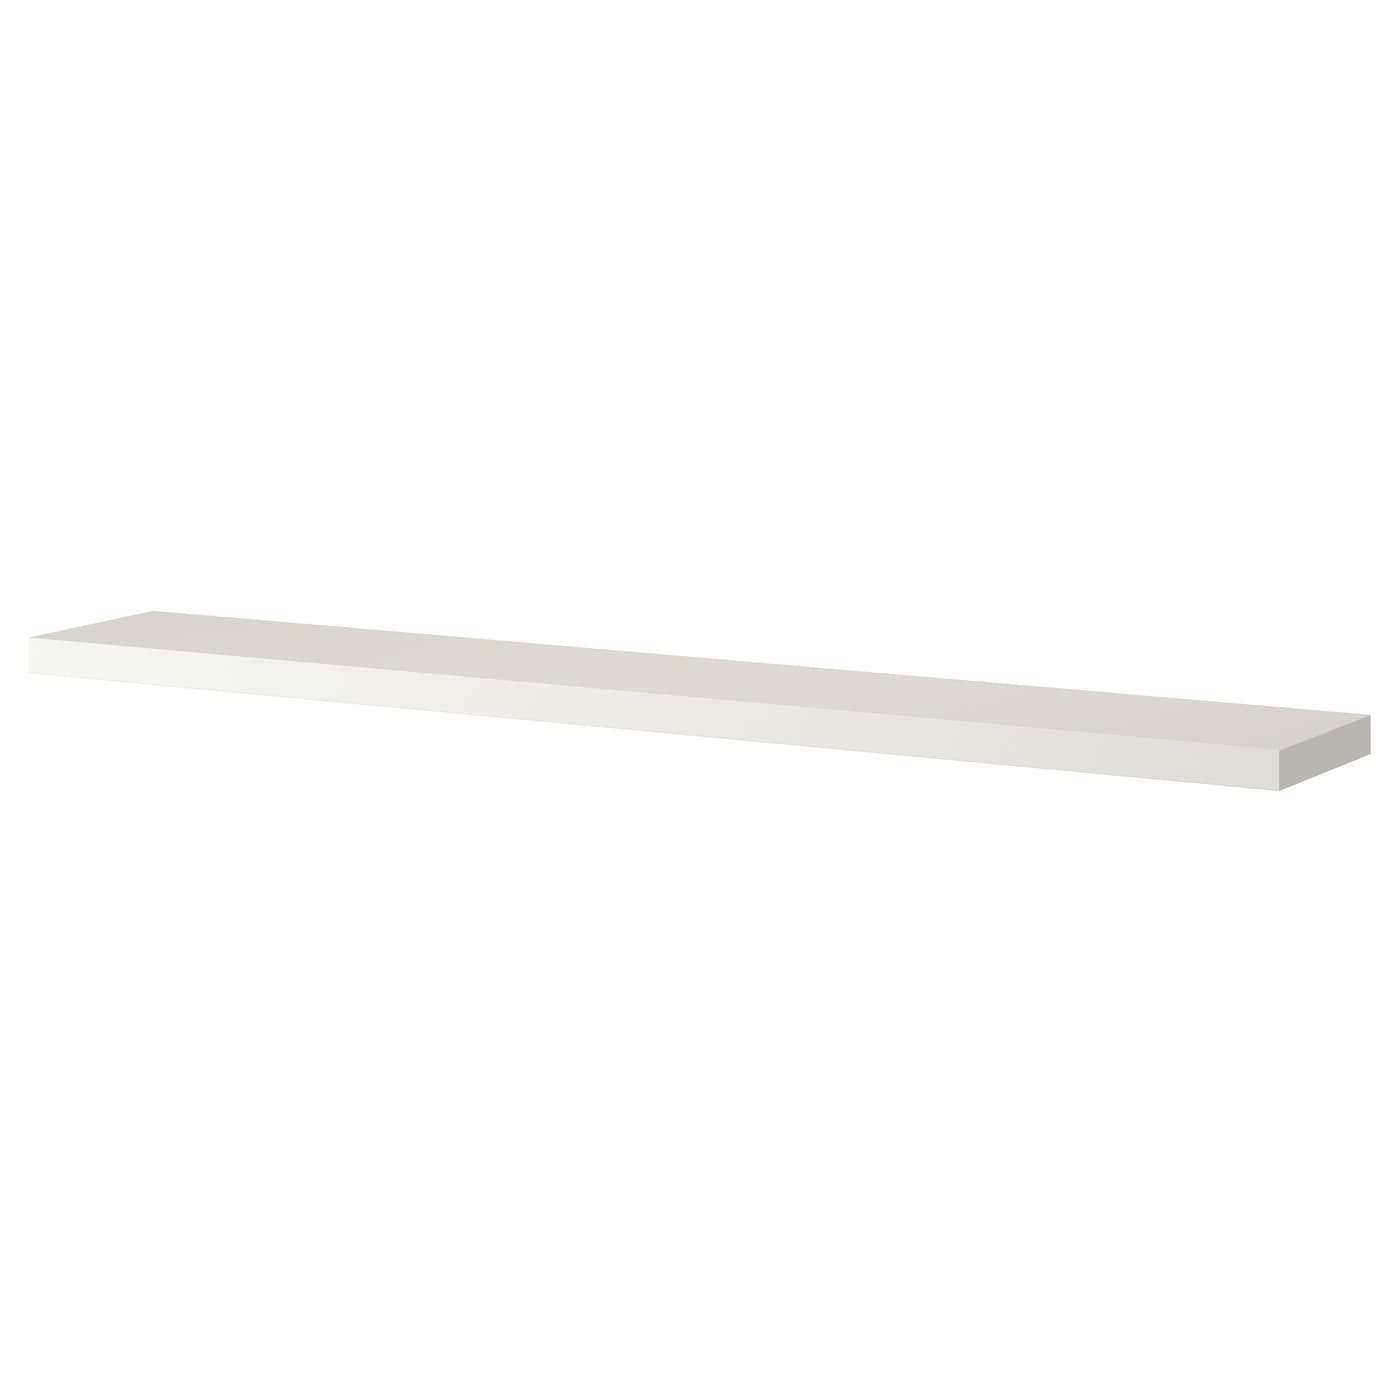 Полка настенная без ножки - IKEA LACK/ЛАКК ИКЕА, 190x26 см, белый